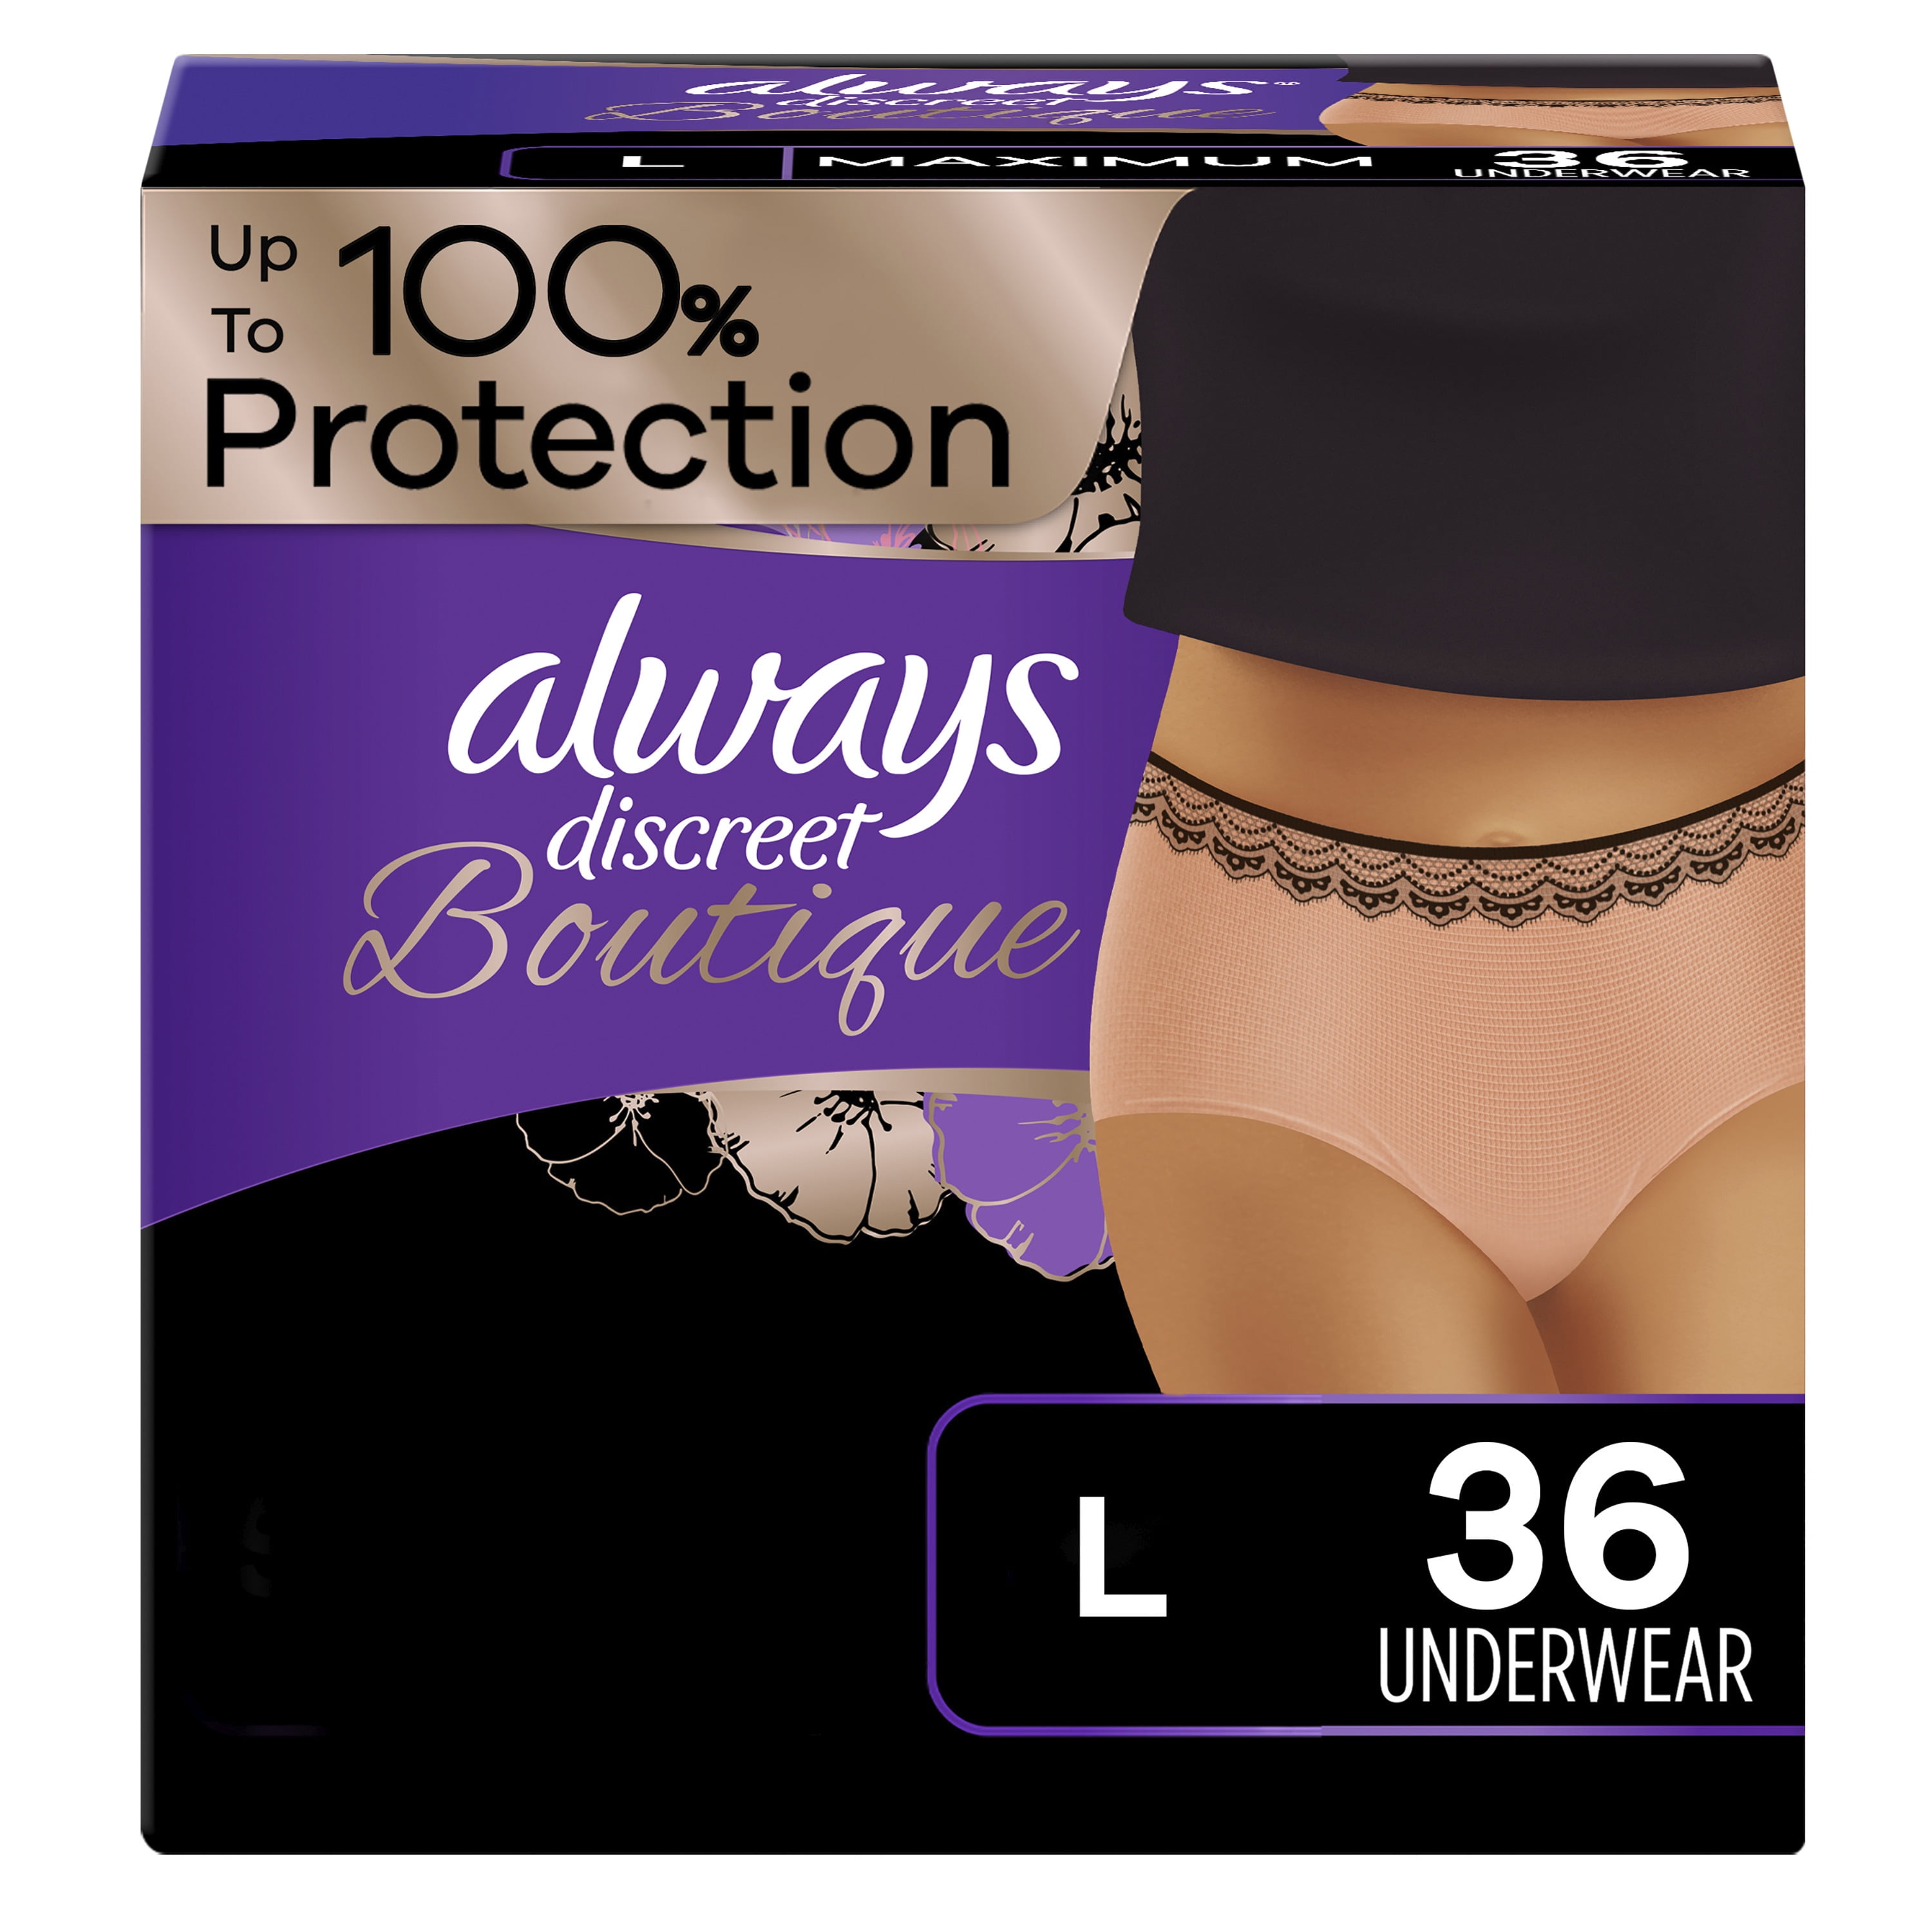 Always Discreet Women's Protective Underwear for Bladder Leaks